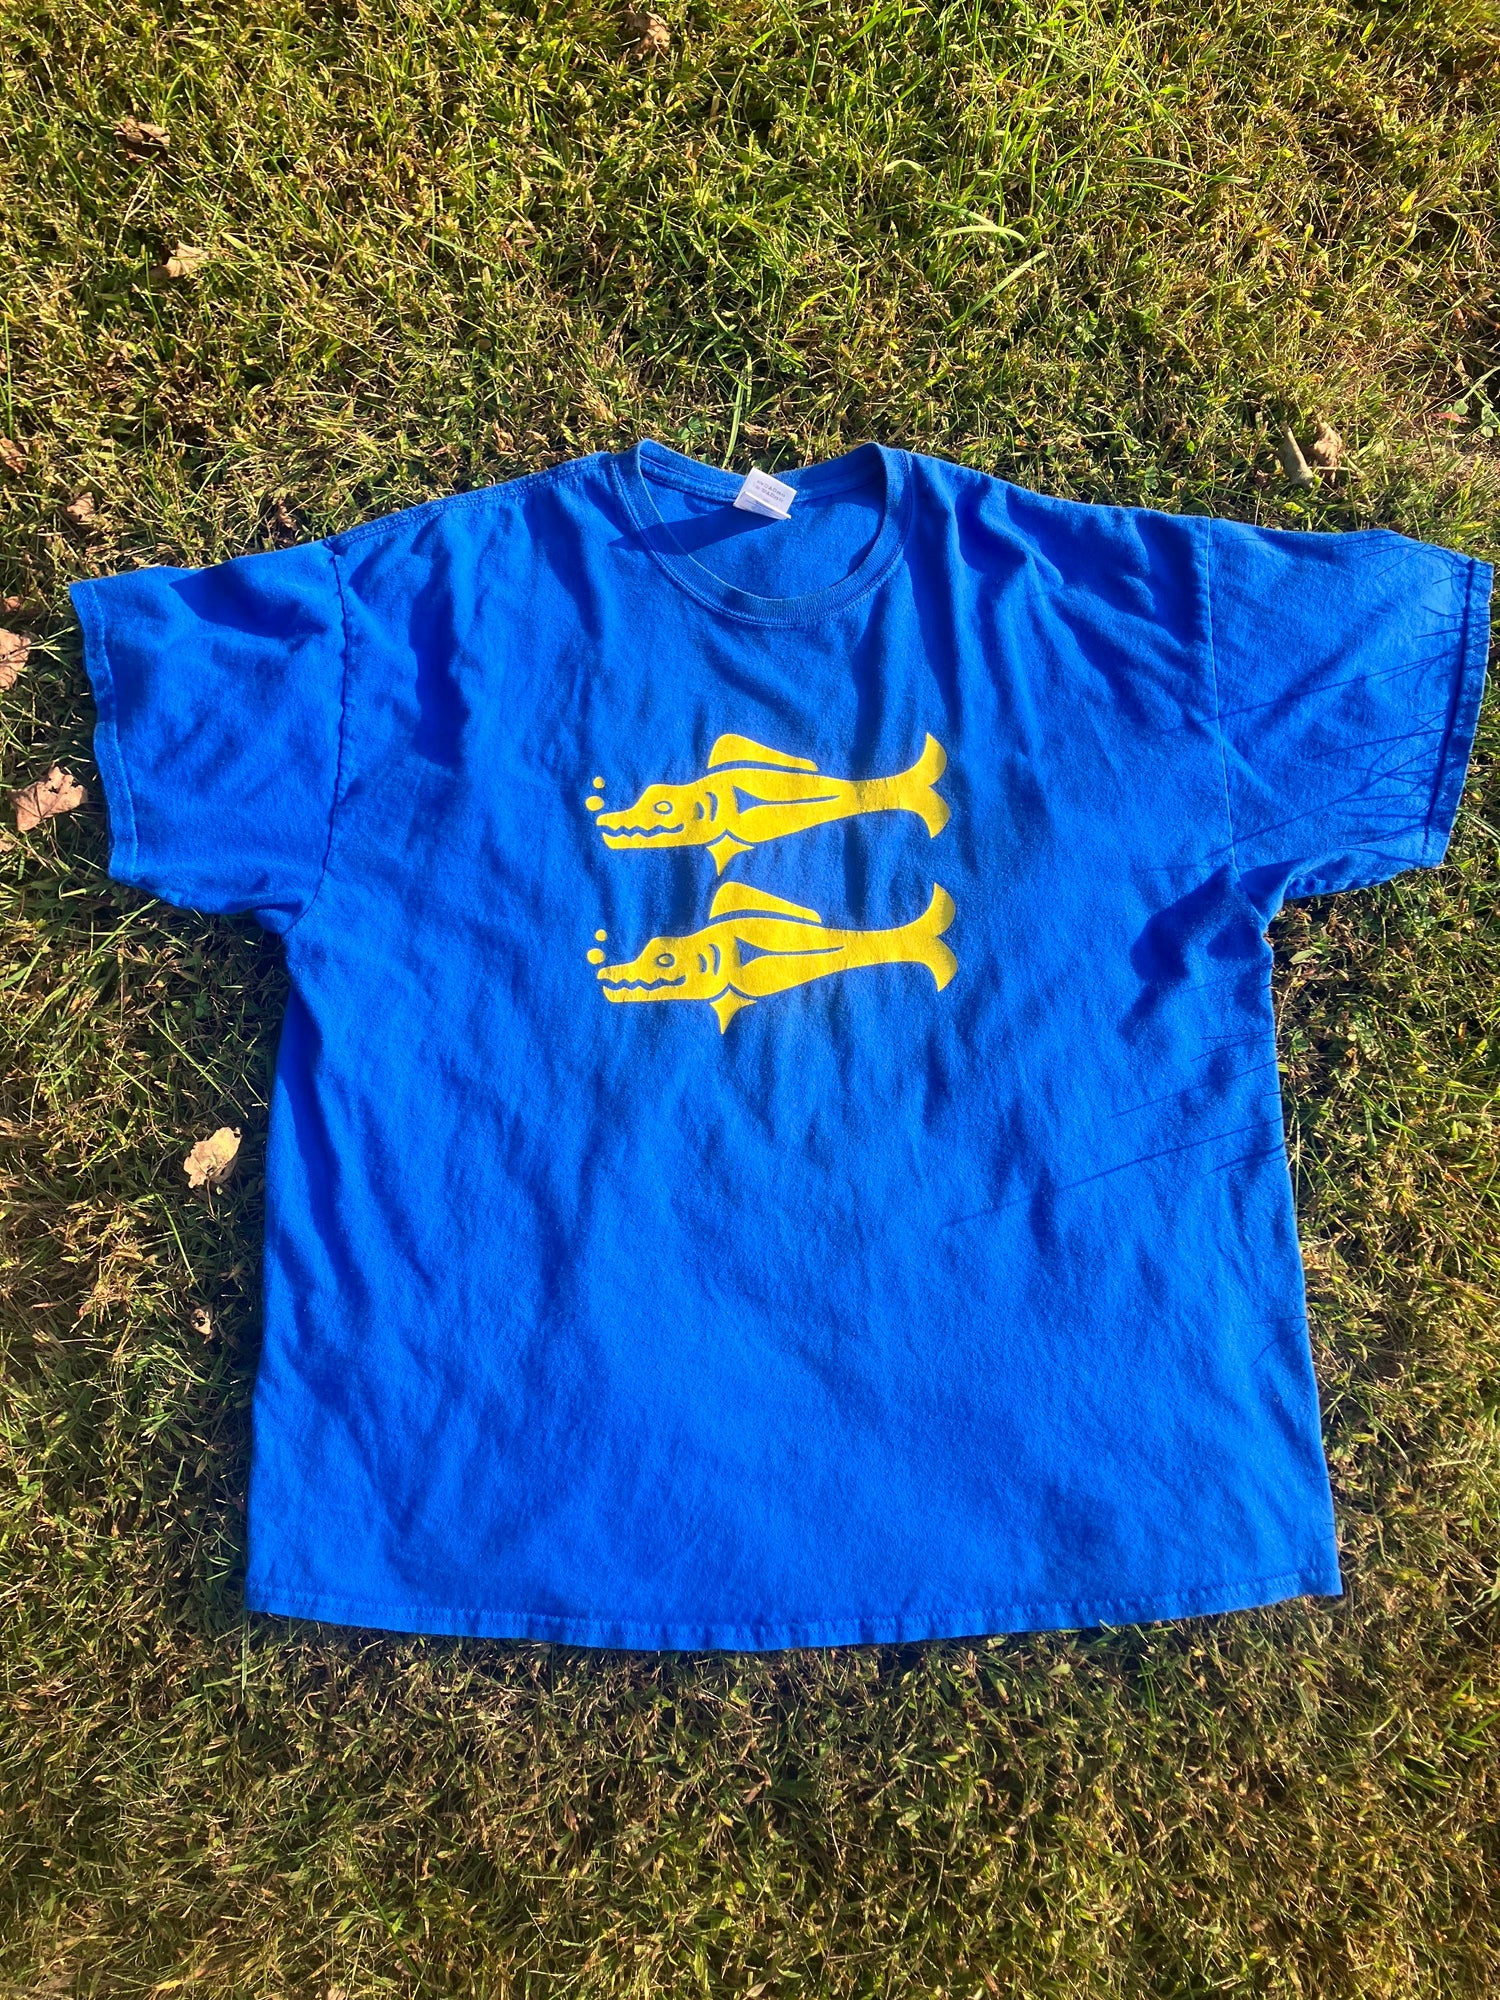 Tampa Bay Rays Shirt Adult Large Blue MLB Baseball Tie Dye Splatter Majestic